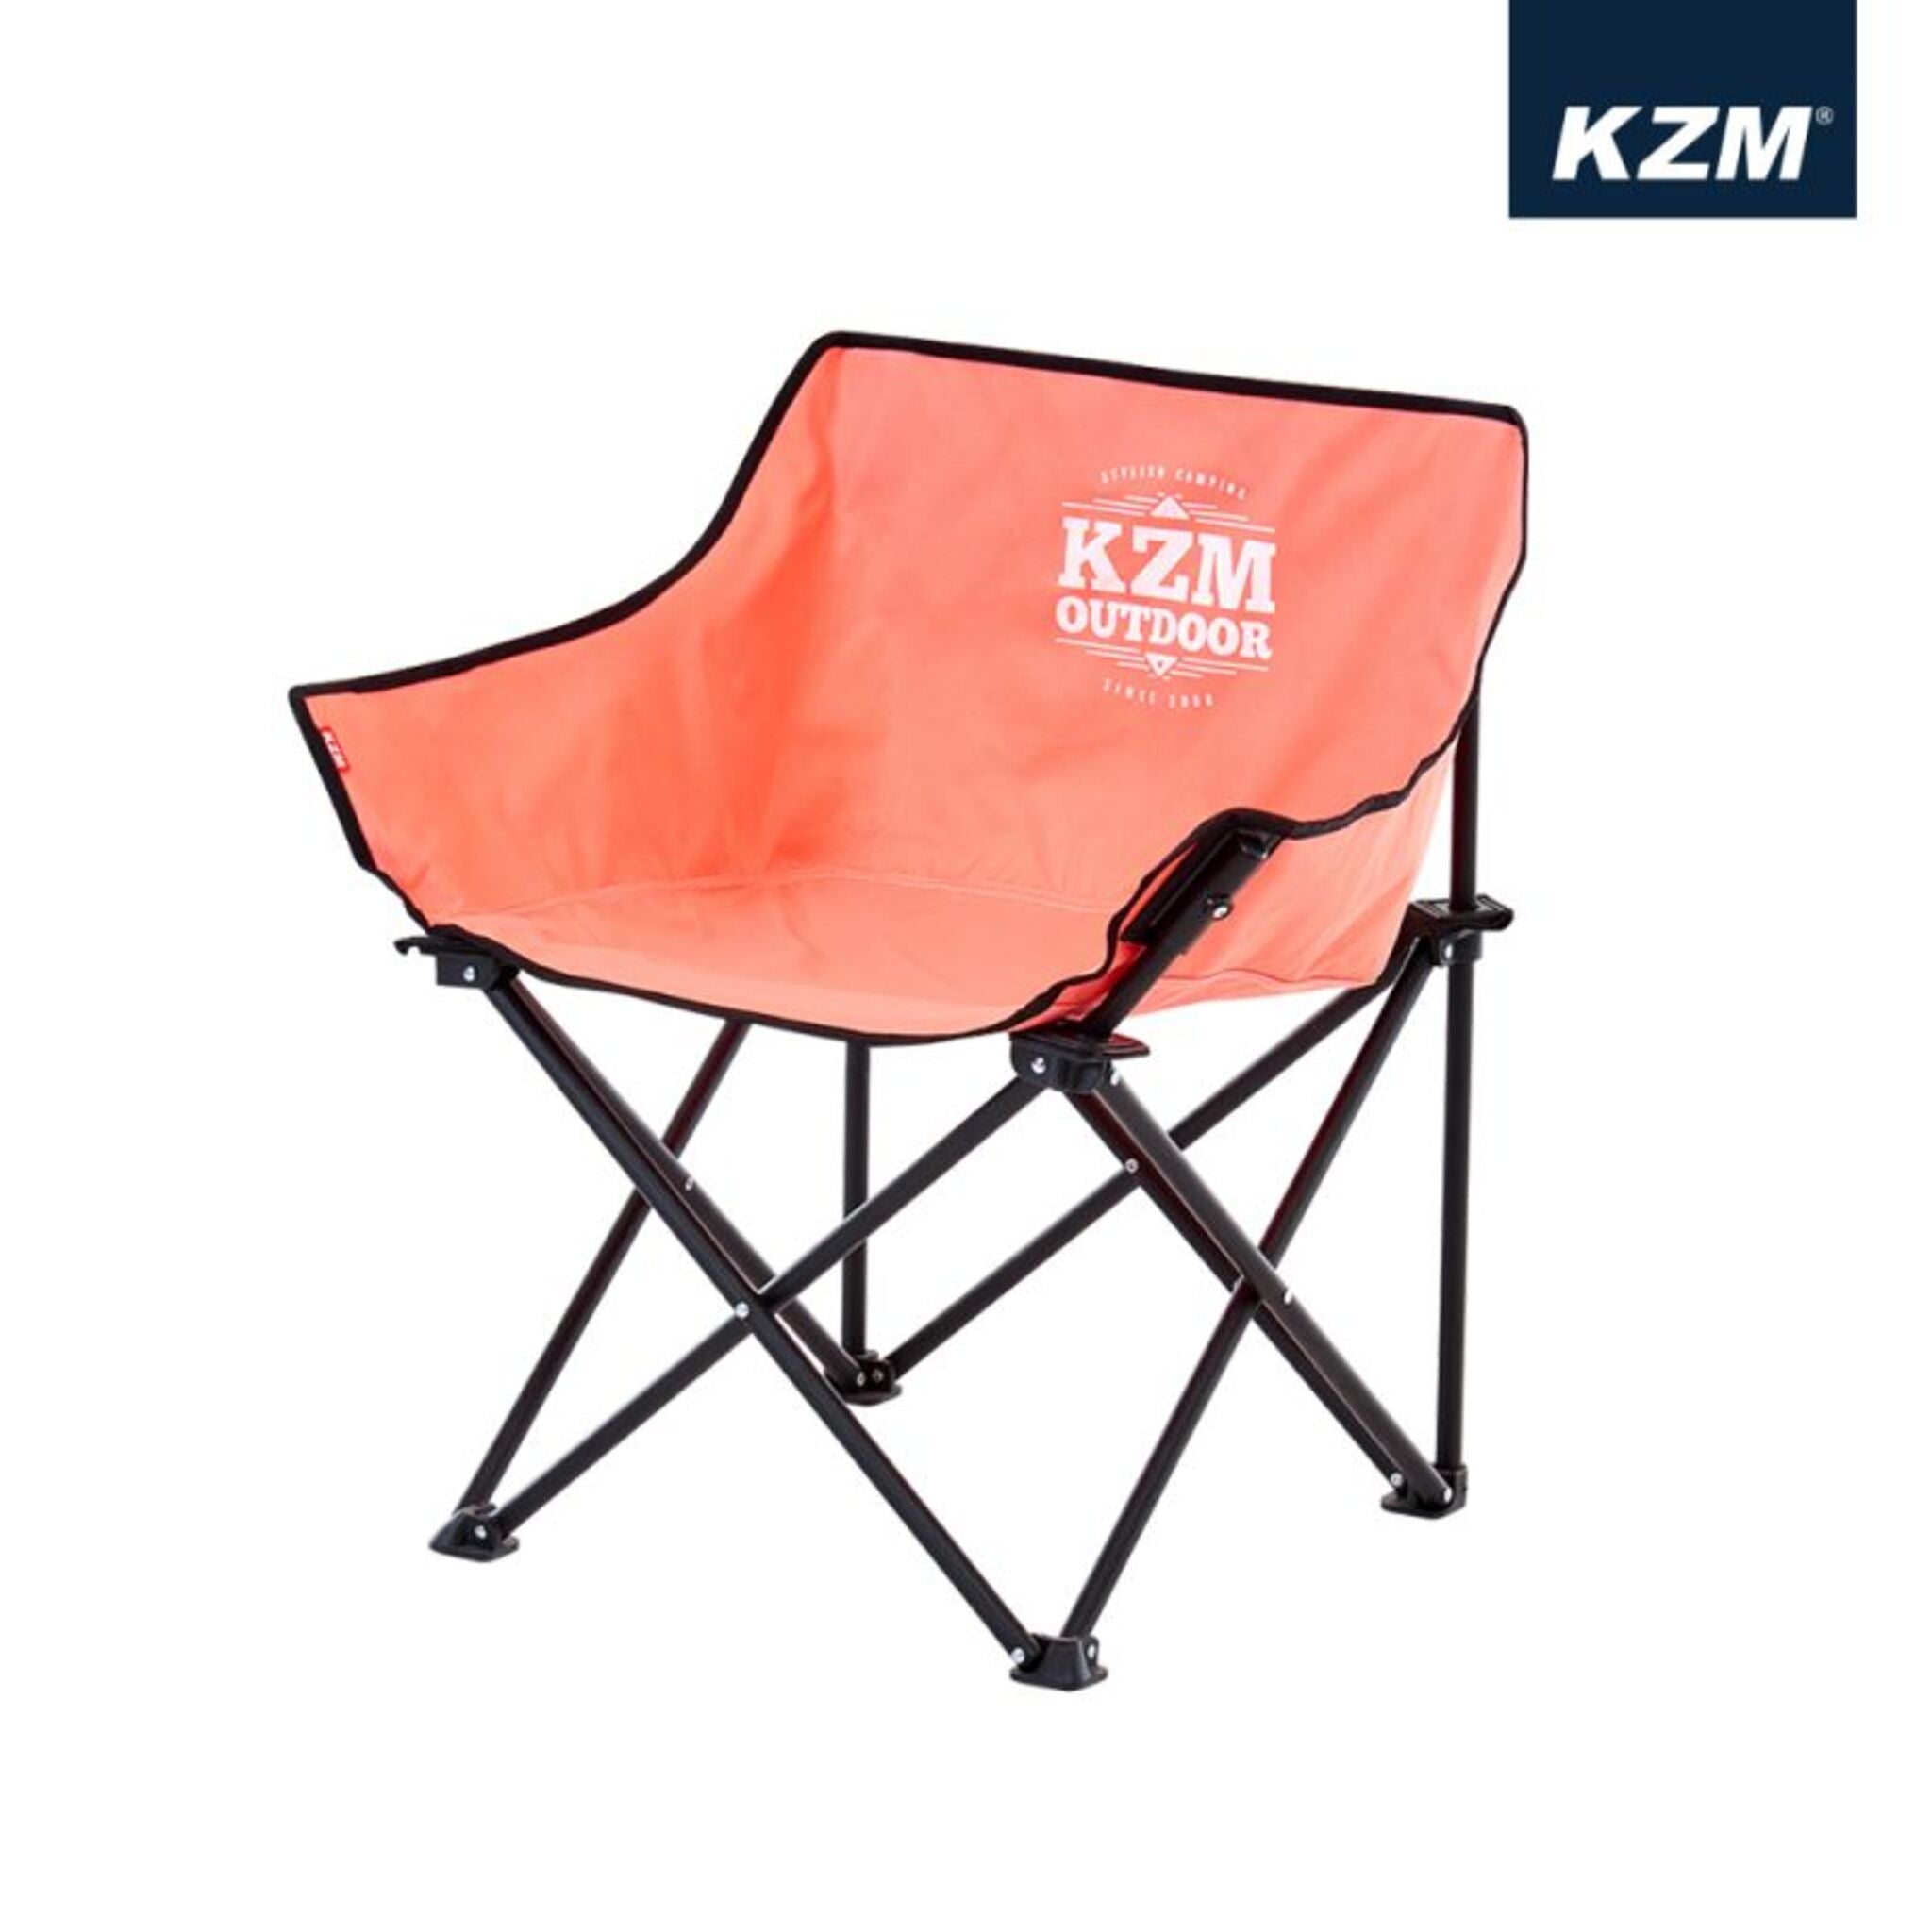 KZM KAZMI 極簡時尚休閒折疊椅 K9T3C002